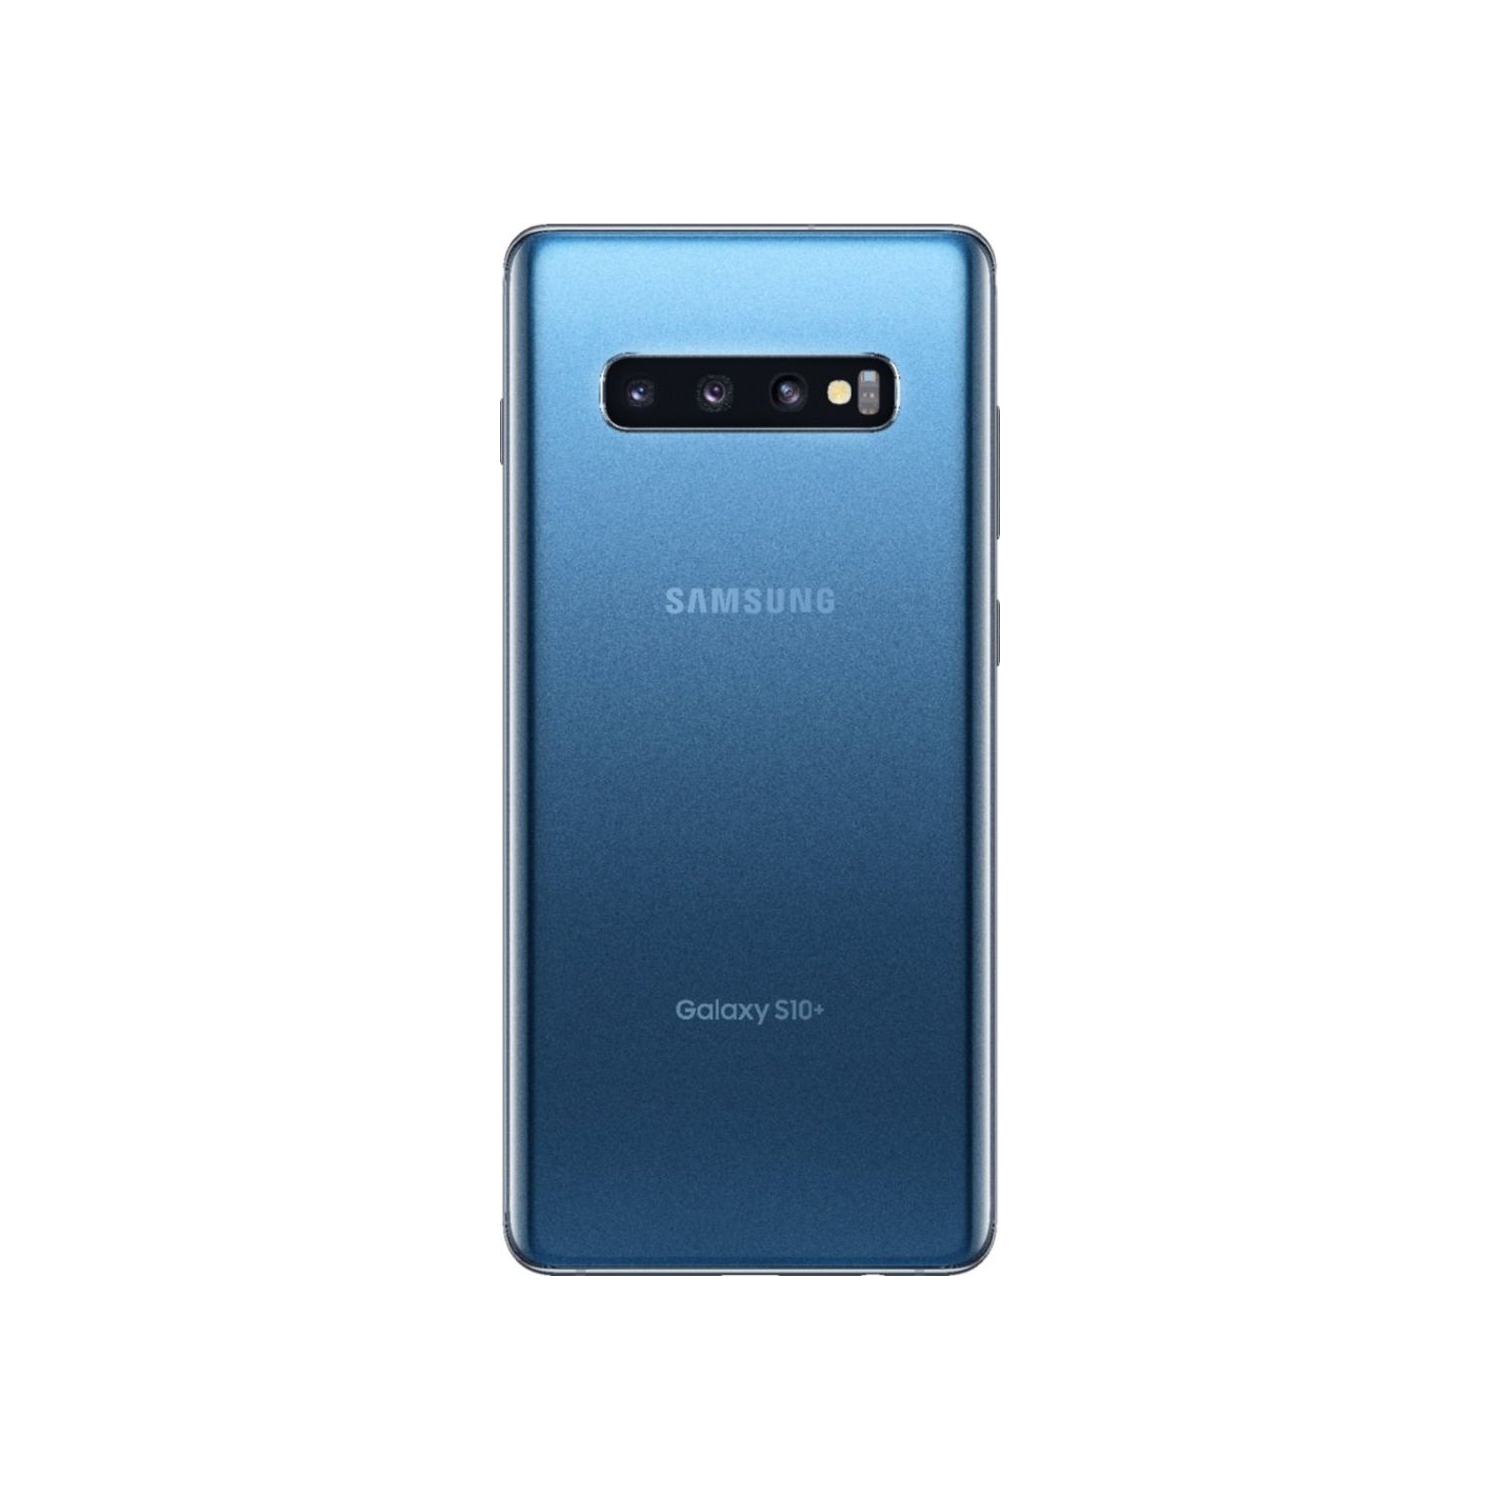 Galaxy S10 Plus 128GB Smartphone - Prism Blue - Unlocked - Open